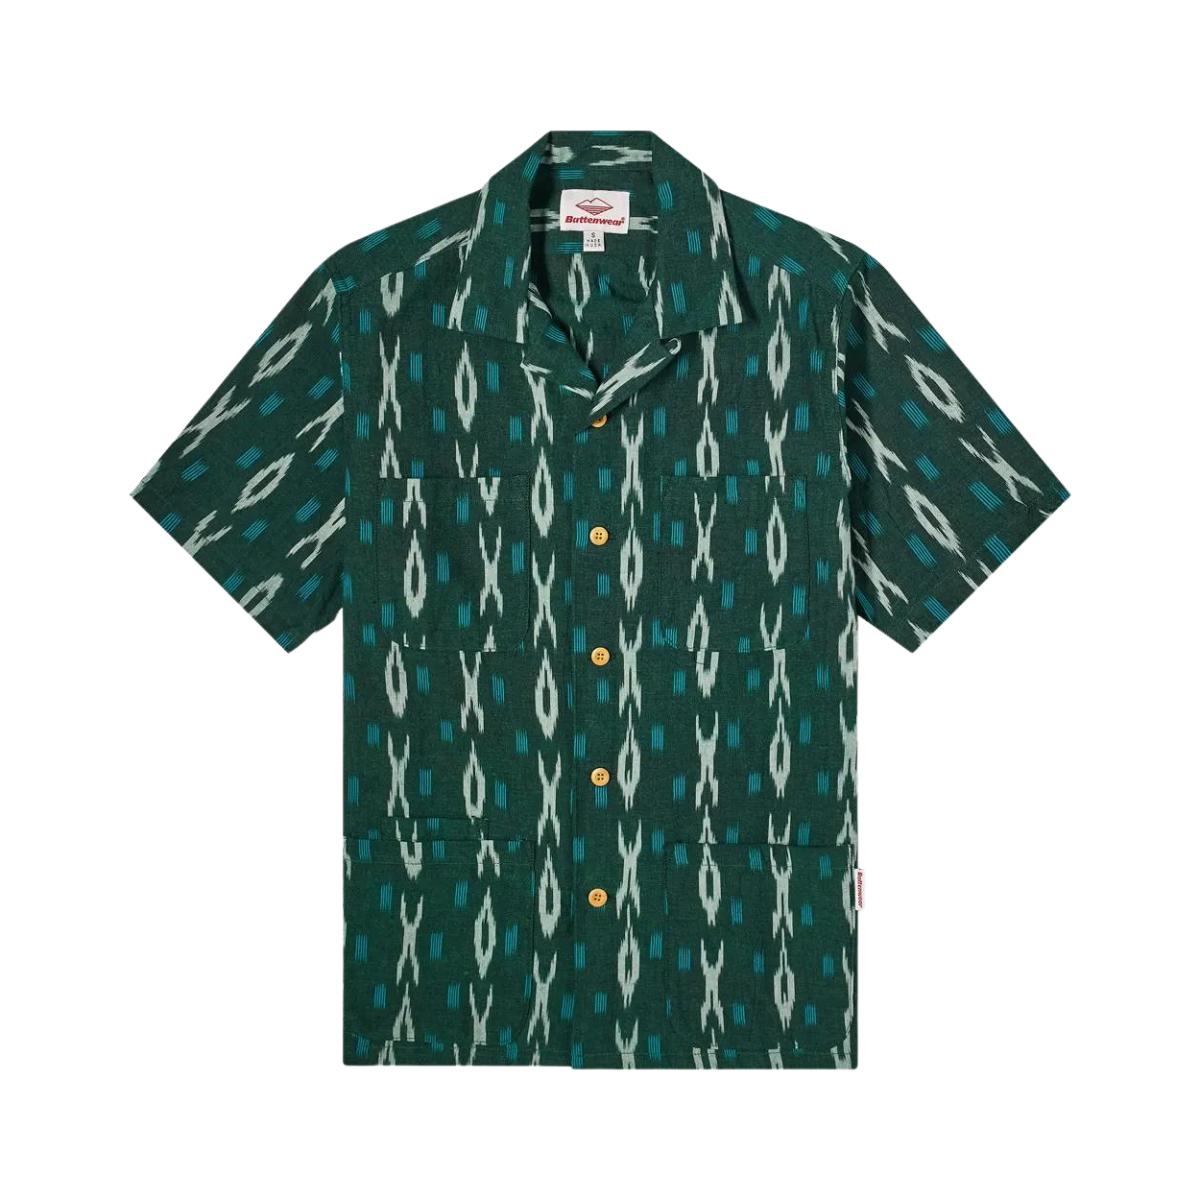 Five | Lyst Shirt for Battenwear Ikat Pocket Men Island Green